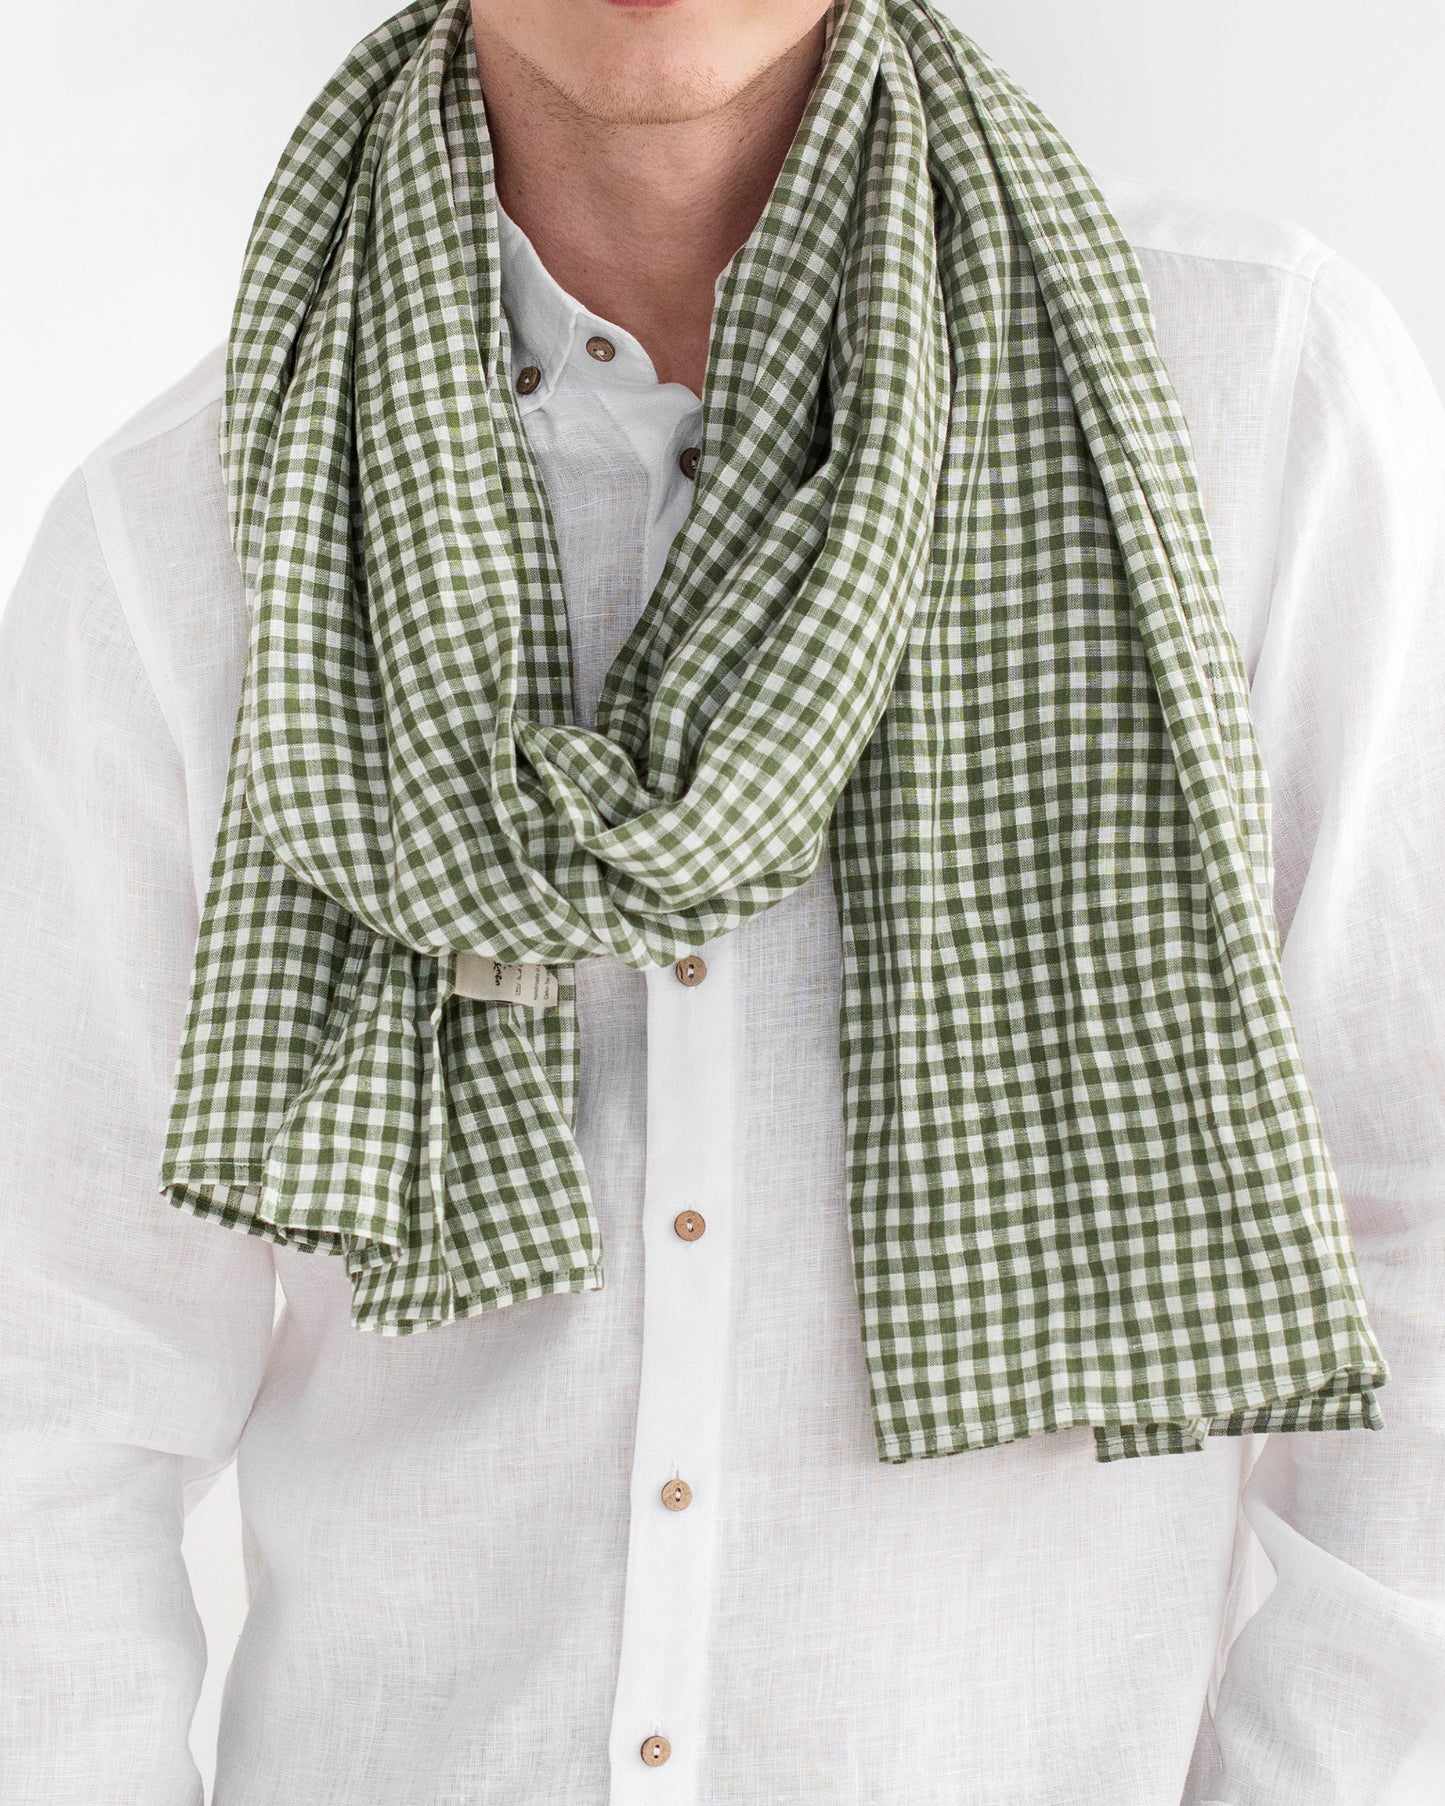 Men's linen scarf in Forest green gingham - MagicLinen